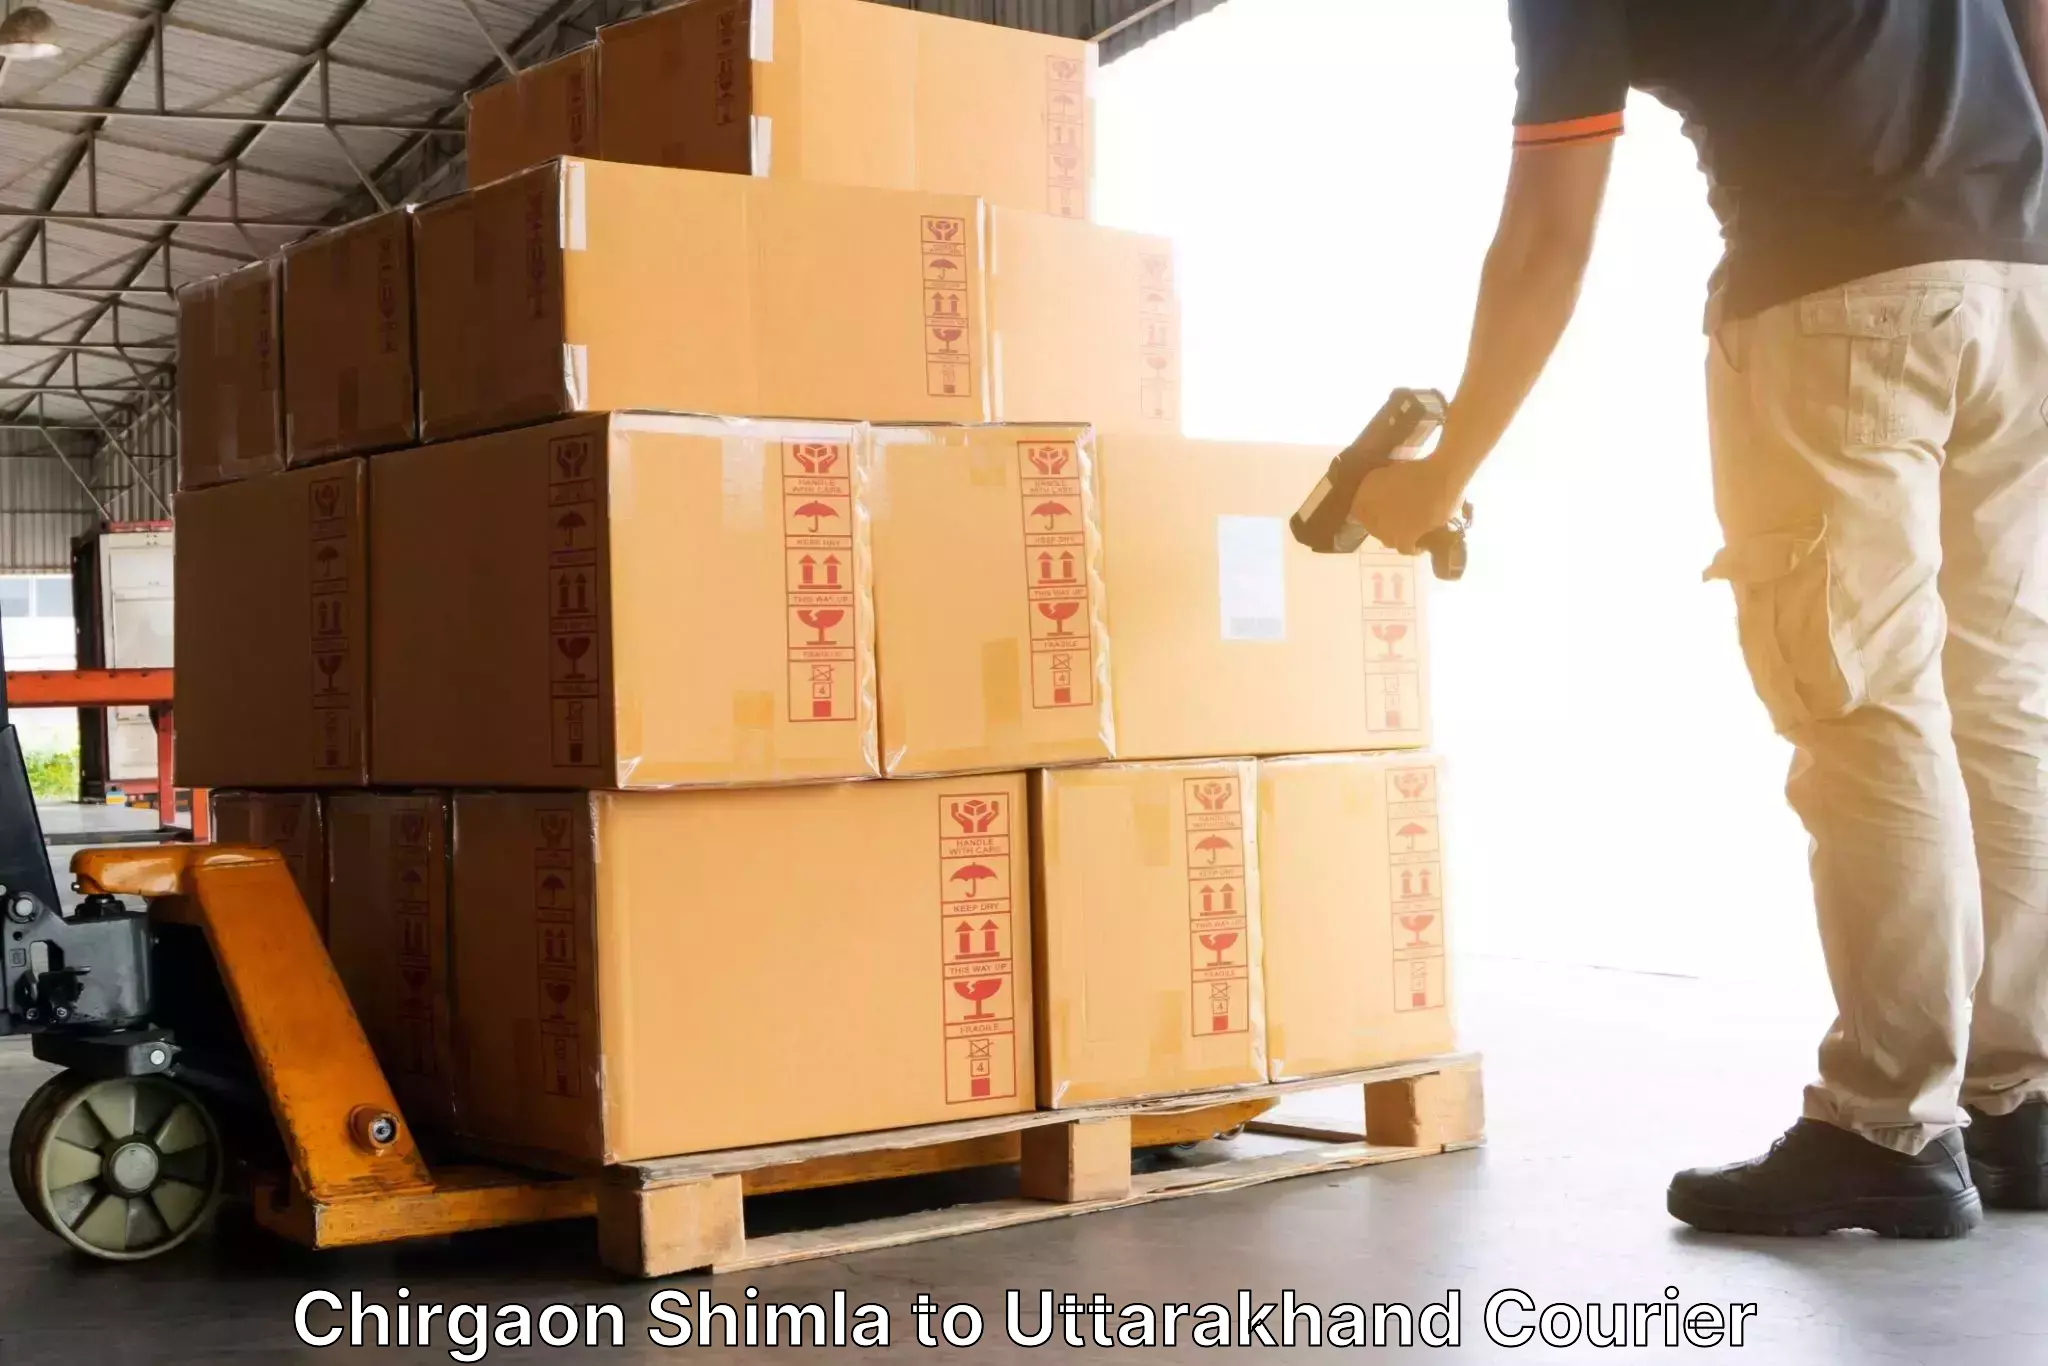 Premium courier solutions Chirgaon Shimla to Dehradun